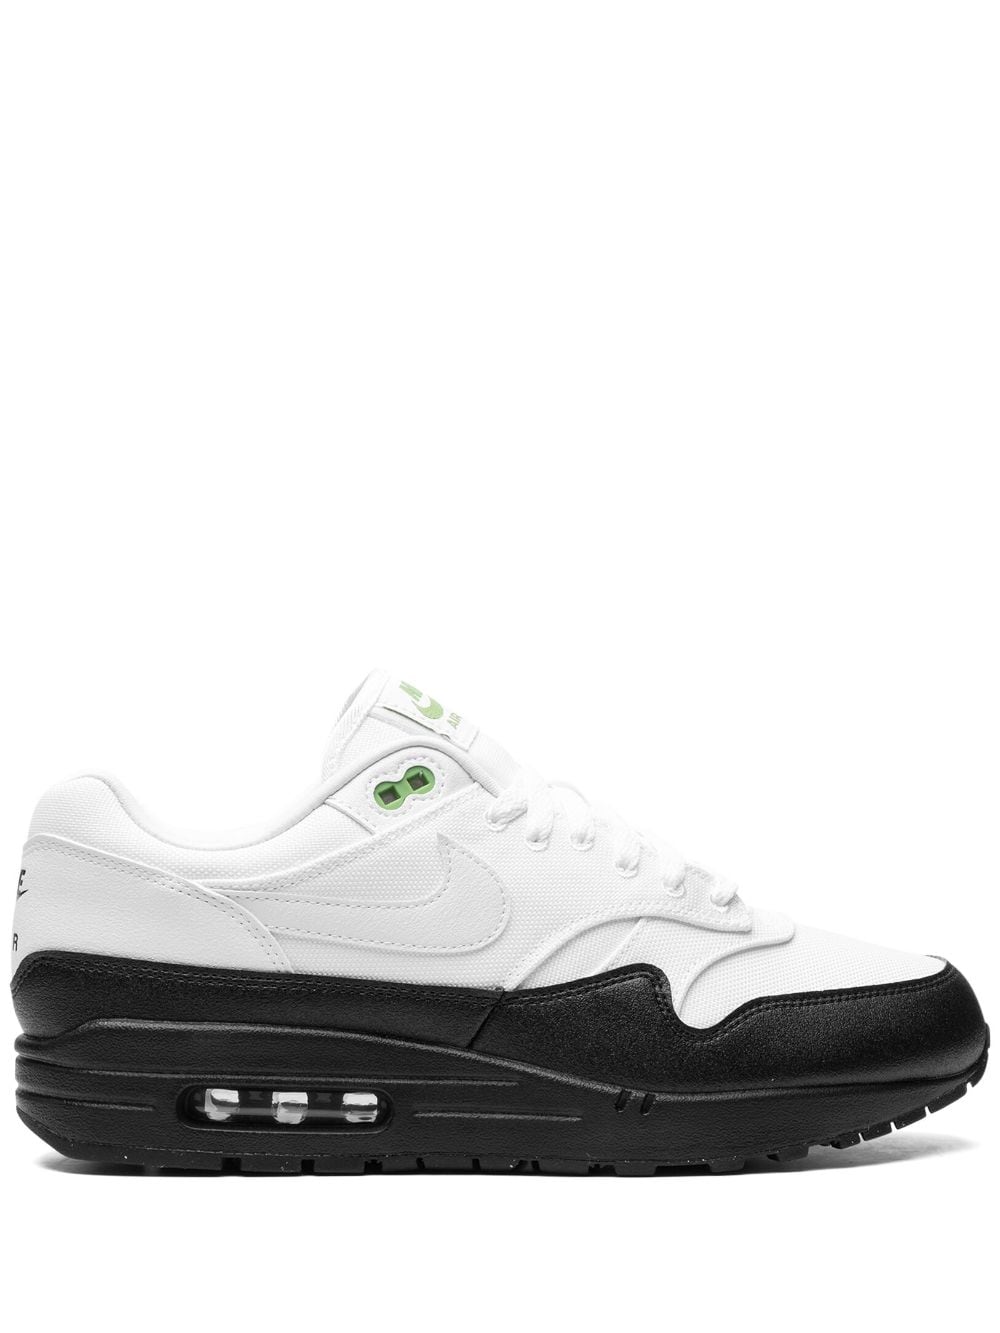 Image 1 of Nike Air Max 1 "Chlorophyll" sneakers